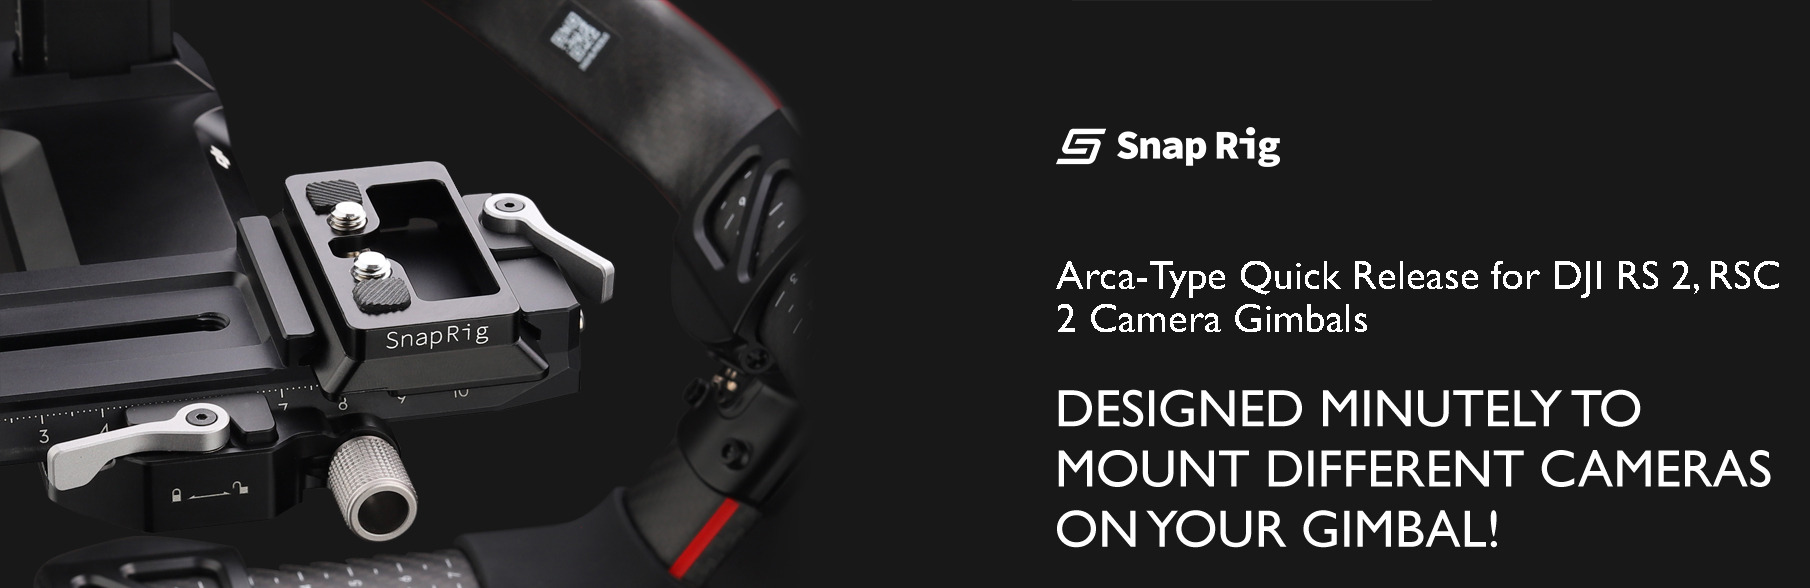 Proaim SnapRig Arca-Type Quick Release for DJI RS 2, RSC 2 Camera Gimbals